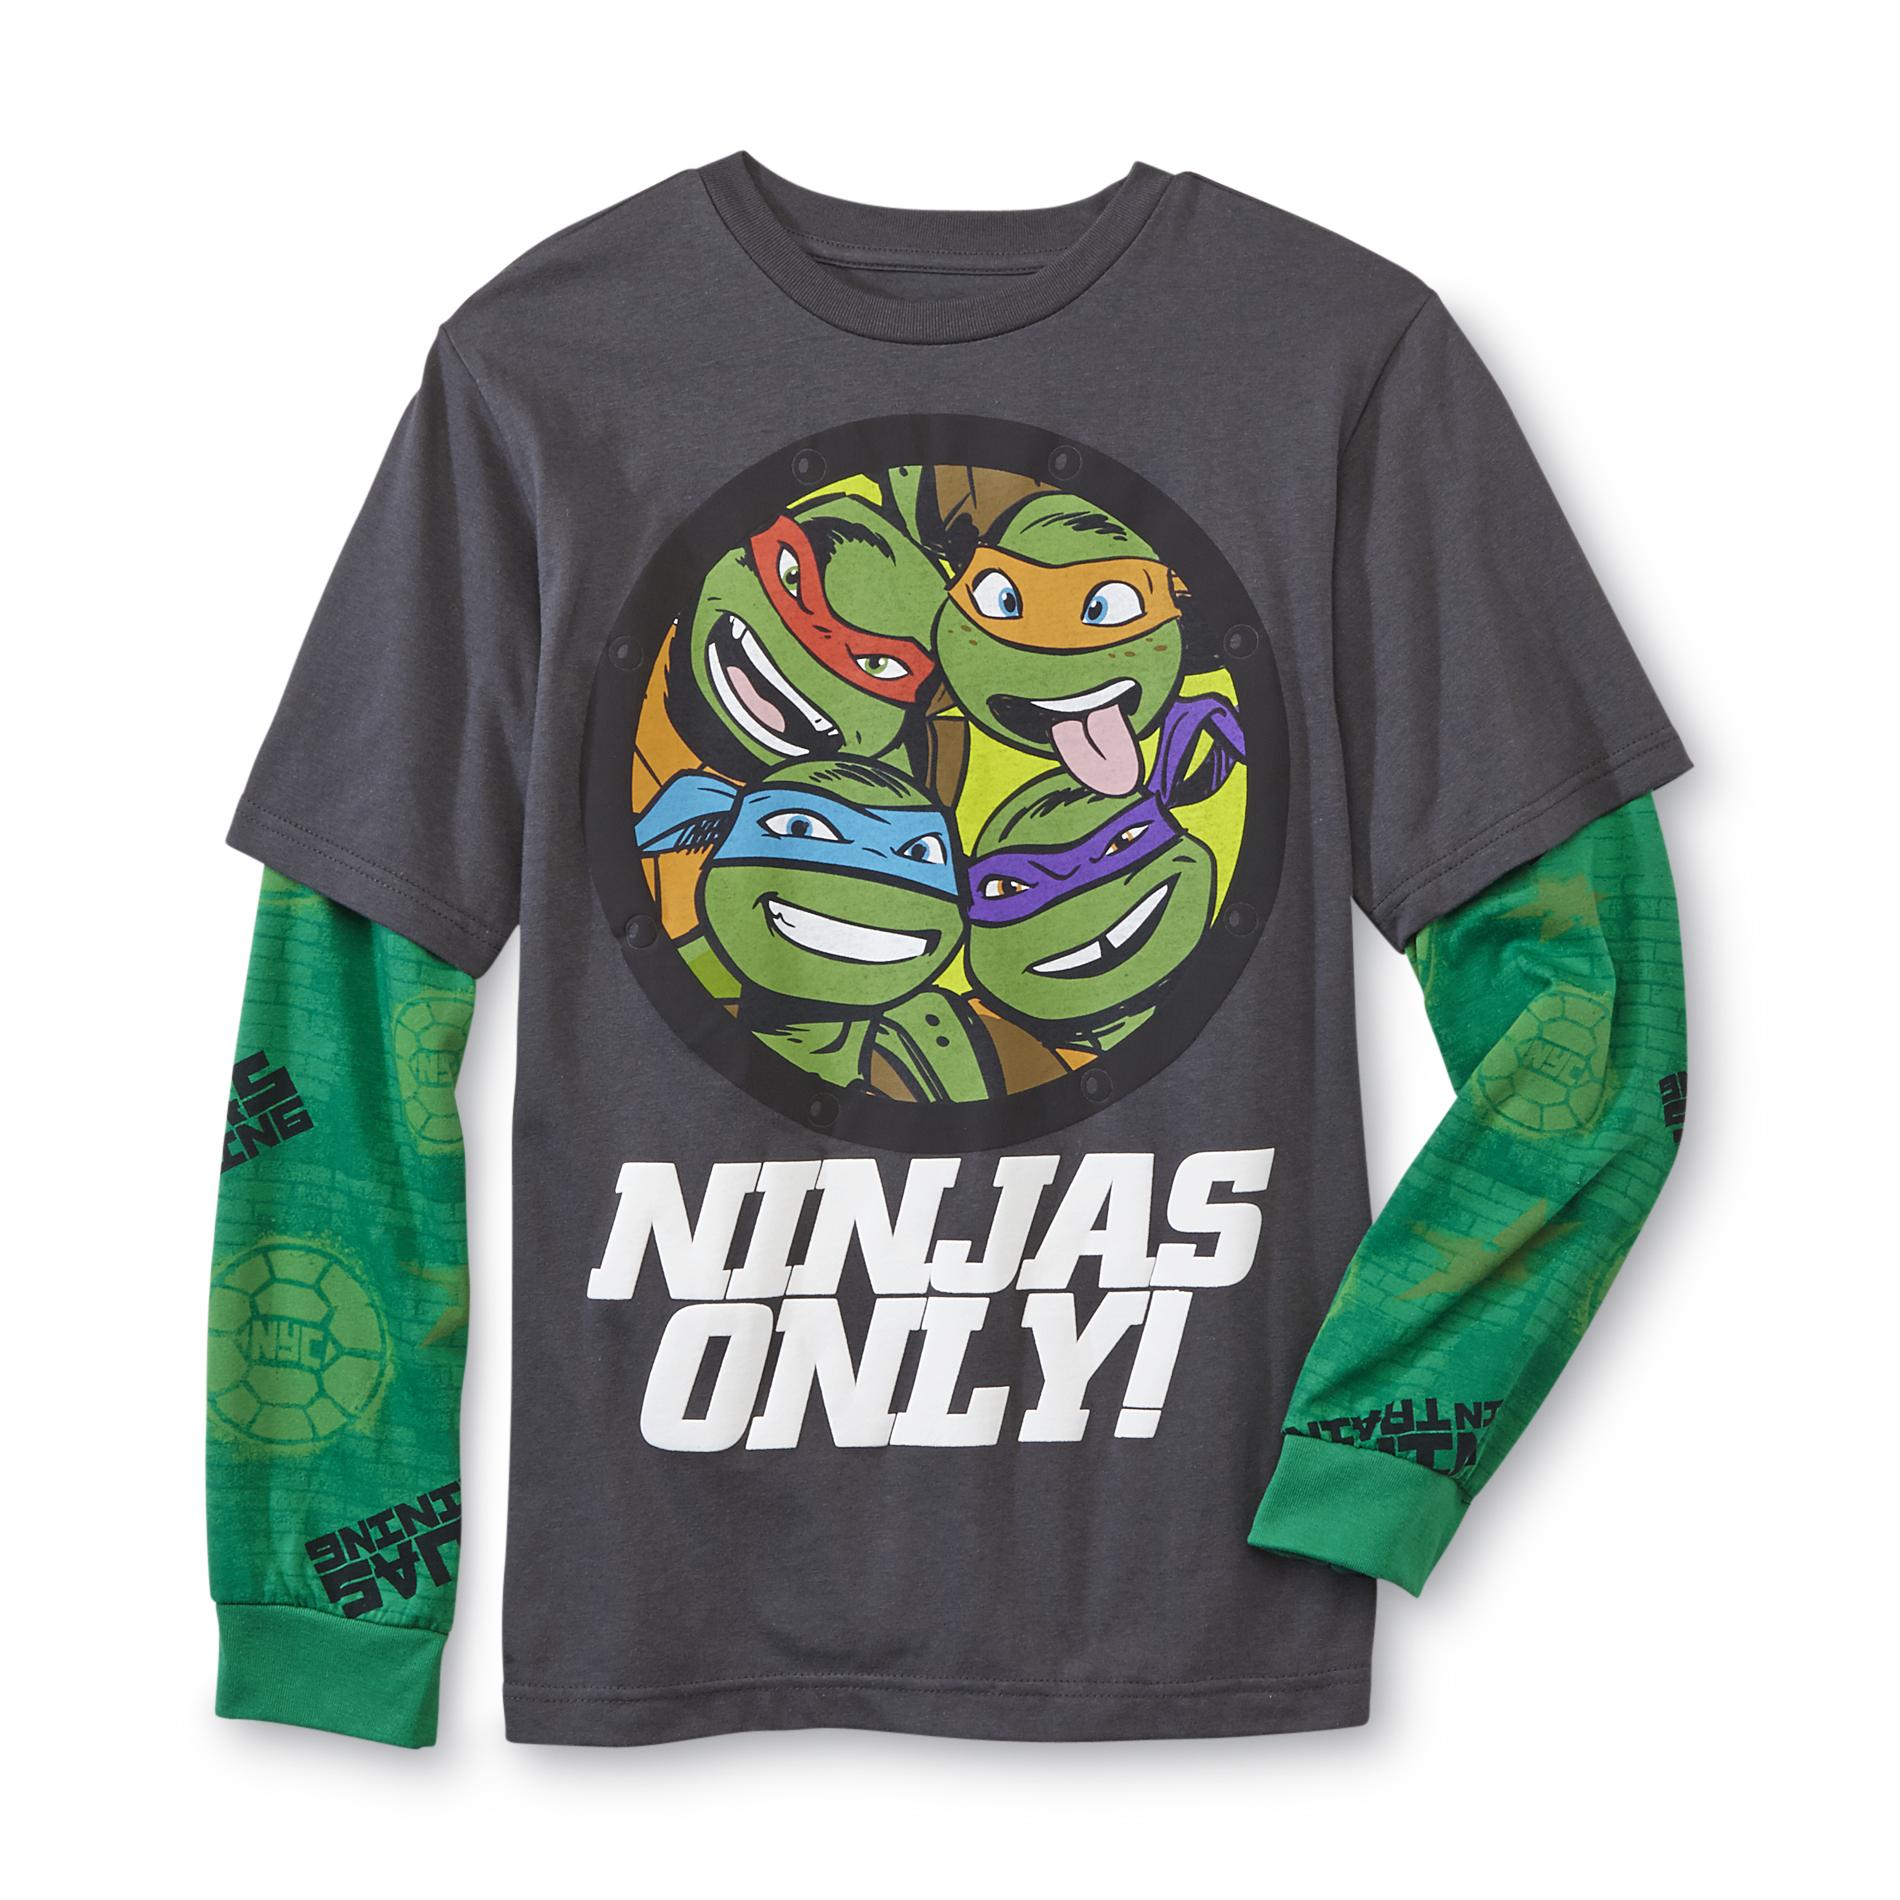 Nickelodeon Teenage Mutant Ninja Turtles Boy's Layered-Look Graphic T-Shirt - Ninjas Only